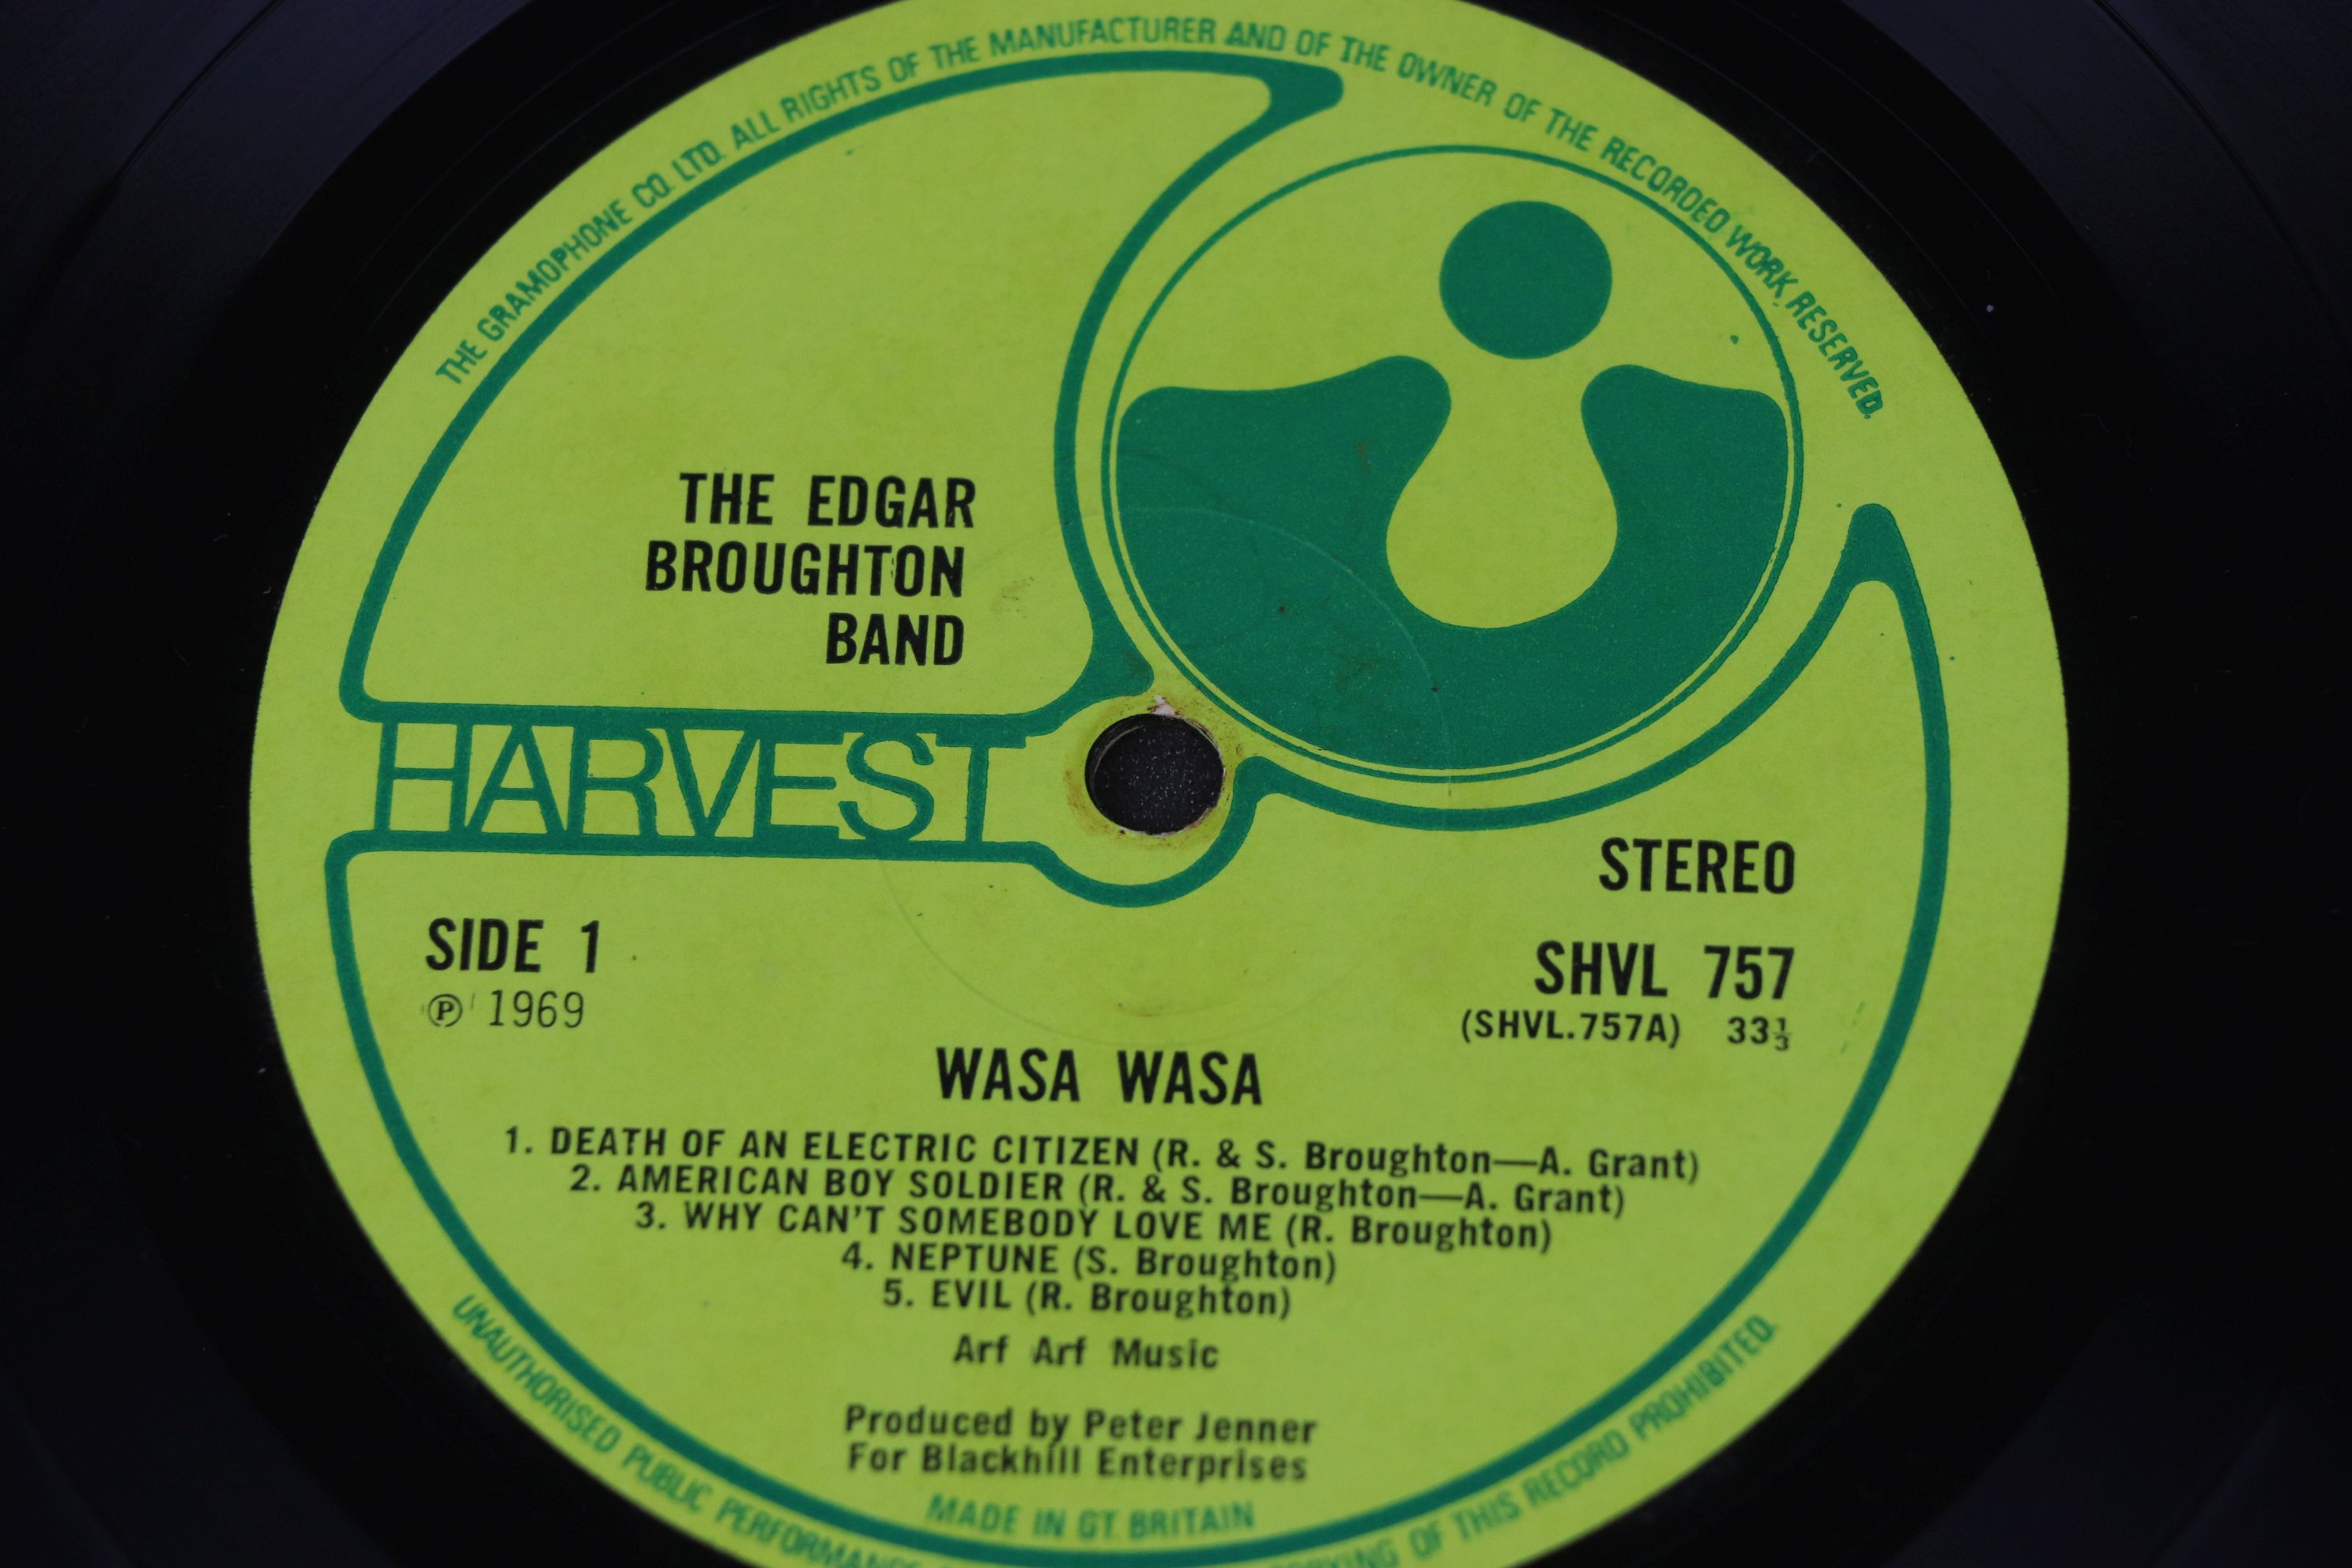 Vinyl - Edgar Broughton Band Wasa Wasa (SHVL 757) no EMI on label or Sold In UK, Harvest advertising - Image 5 of 7